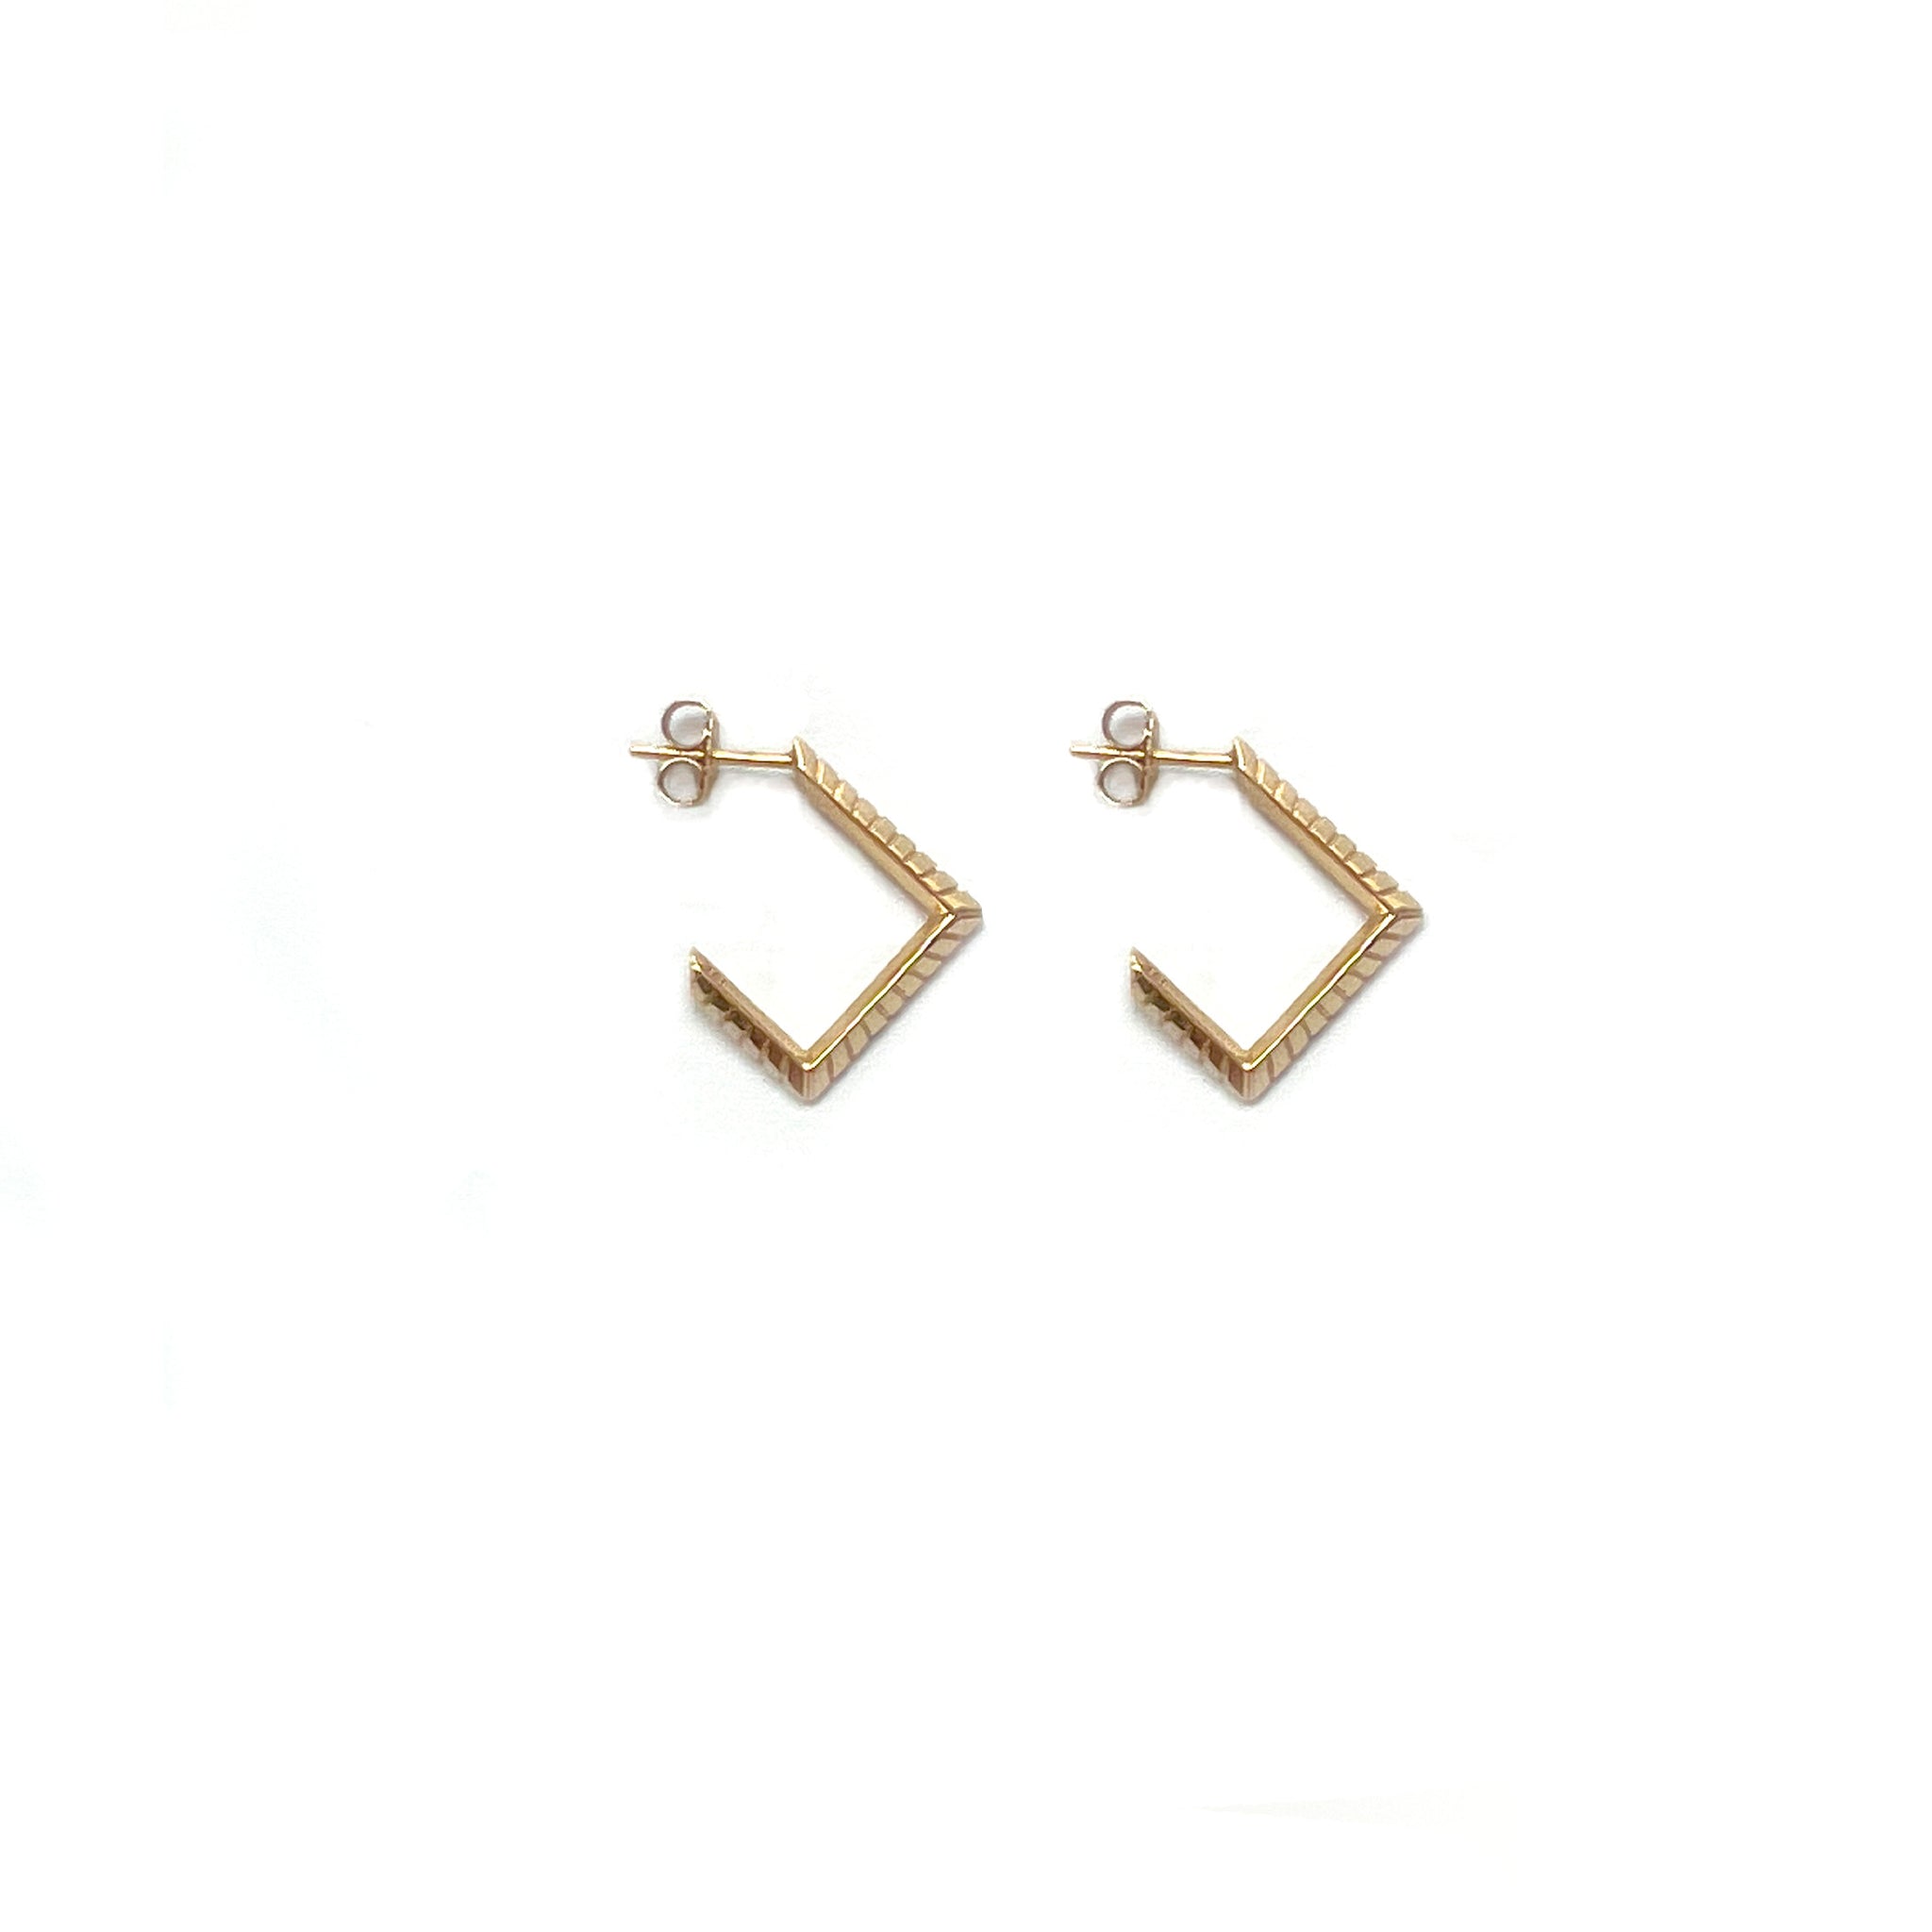 14k Gold Oceana Earrings